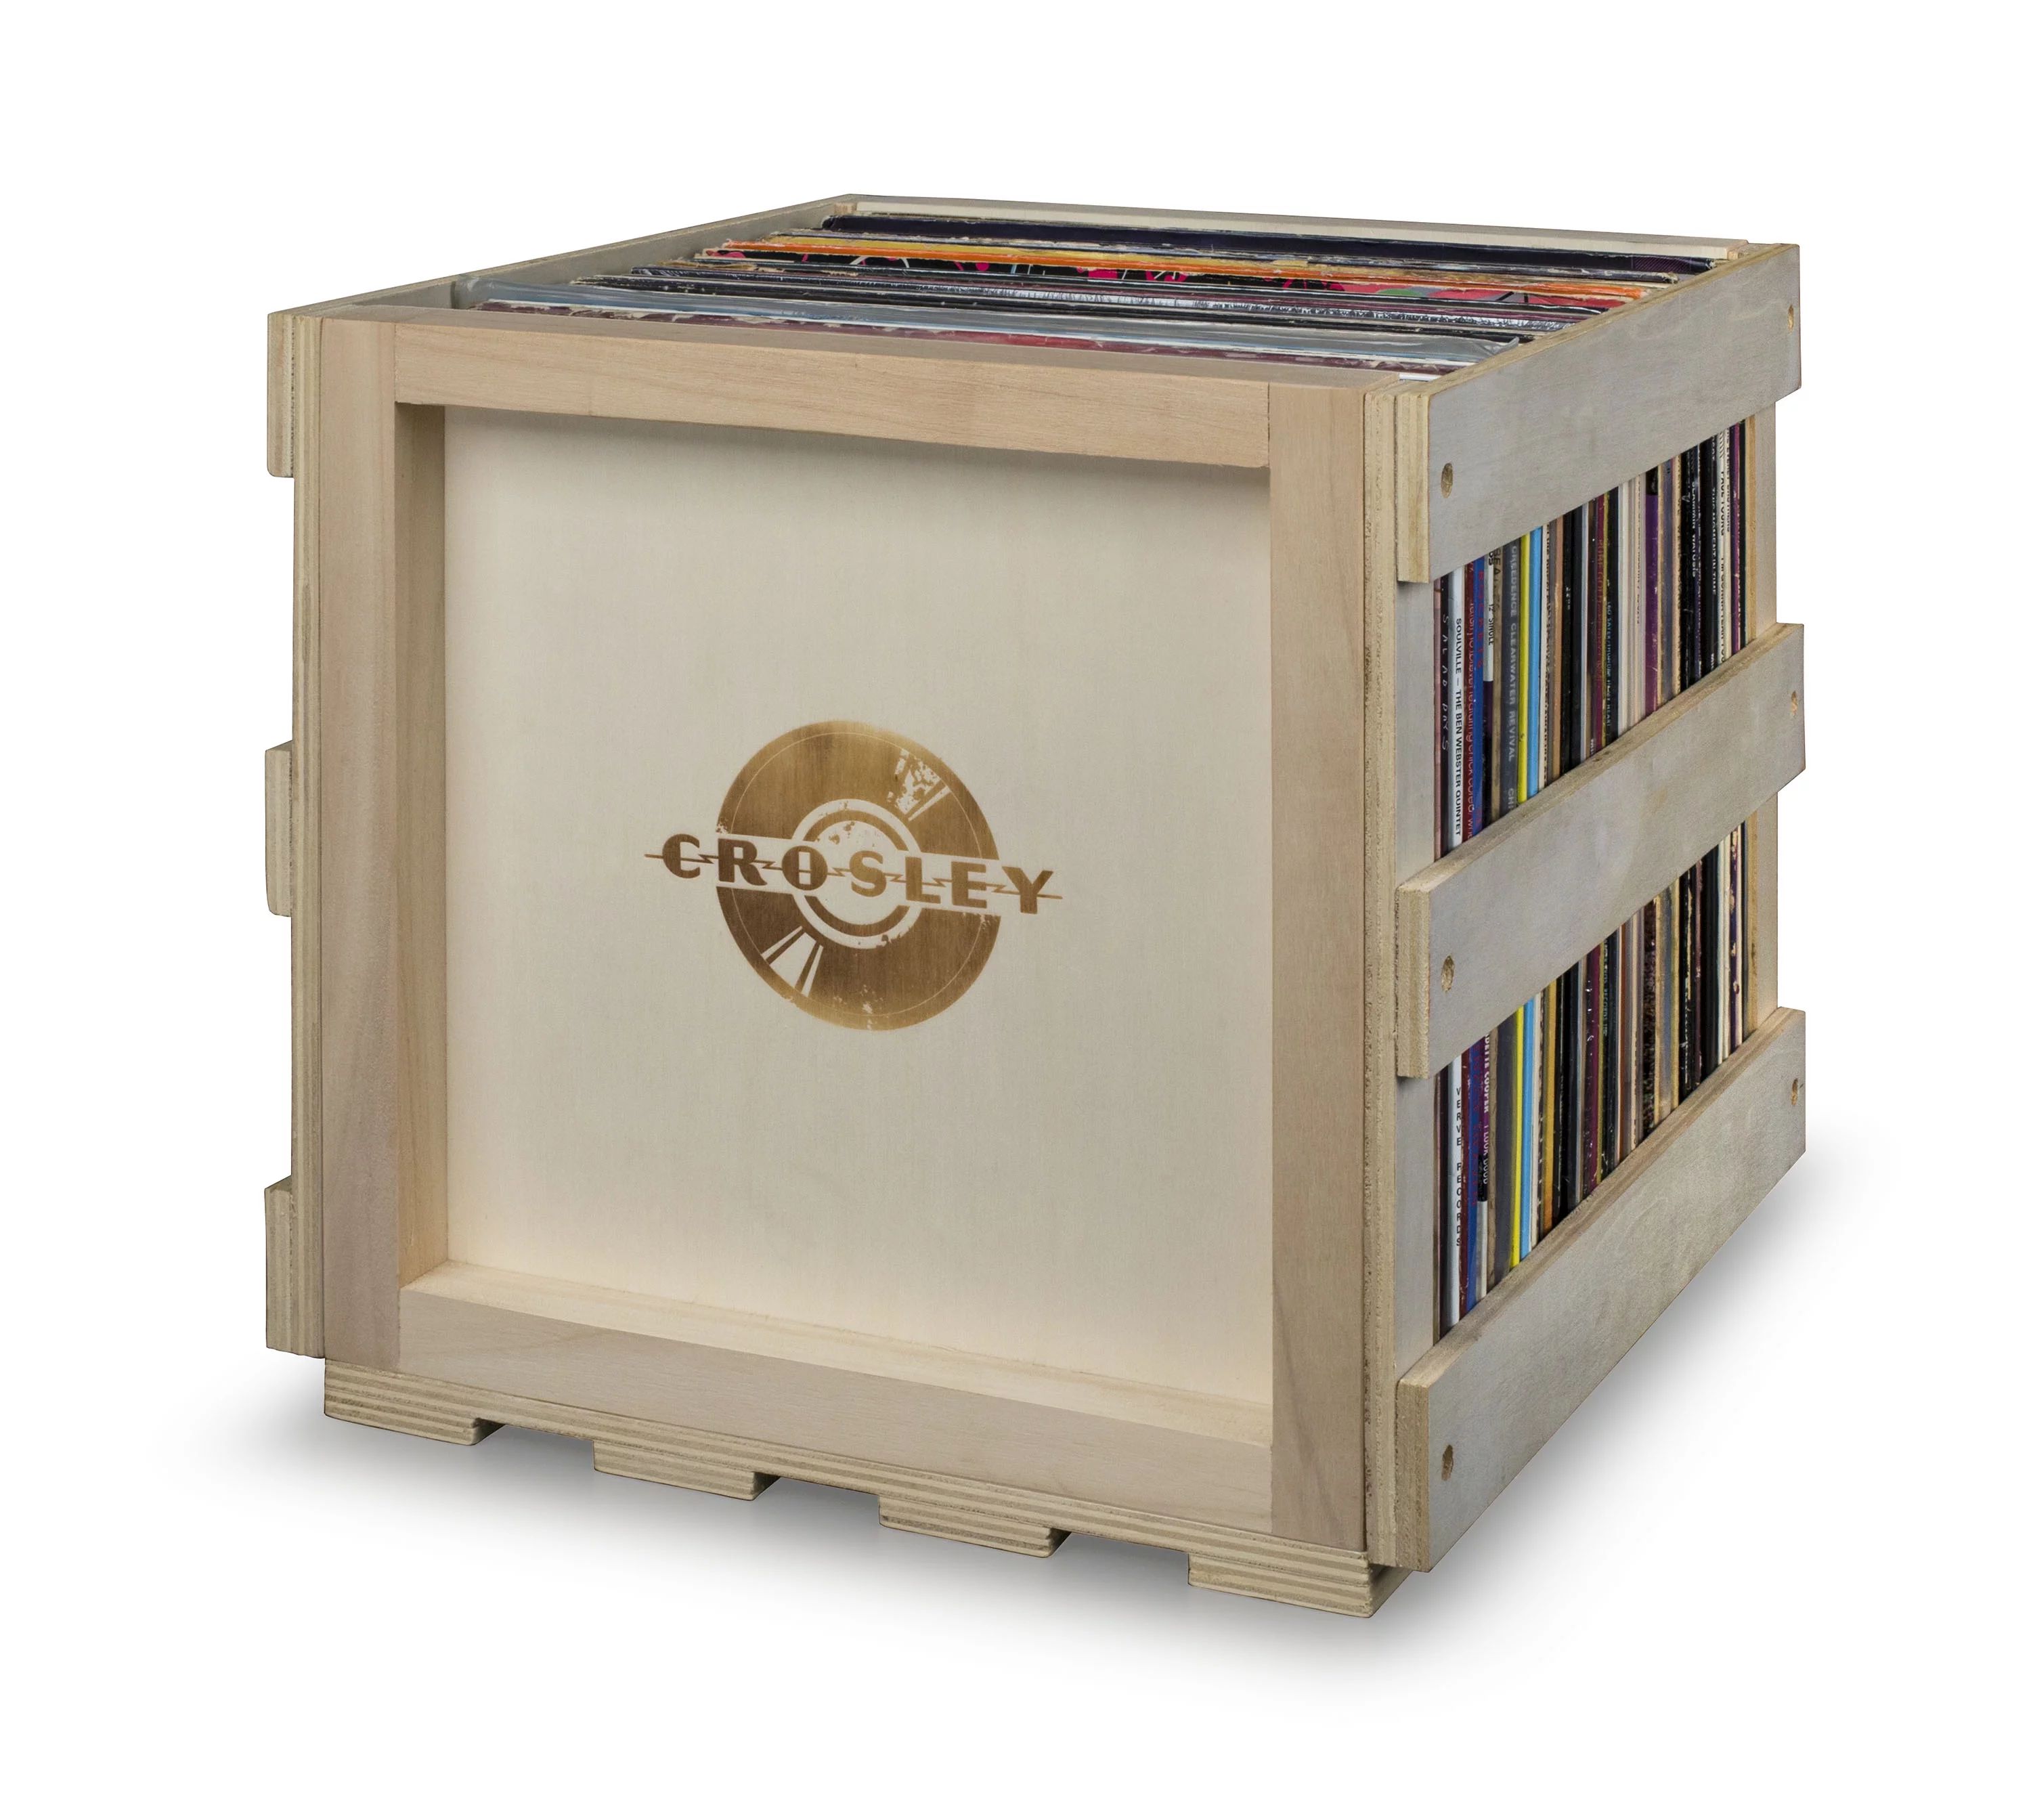 Crosley Stackable Record Storage Crate - Natural | Walmart (US)